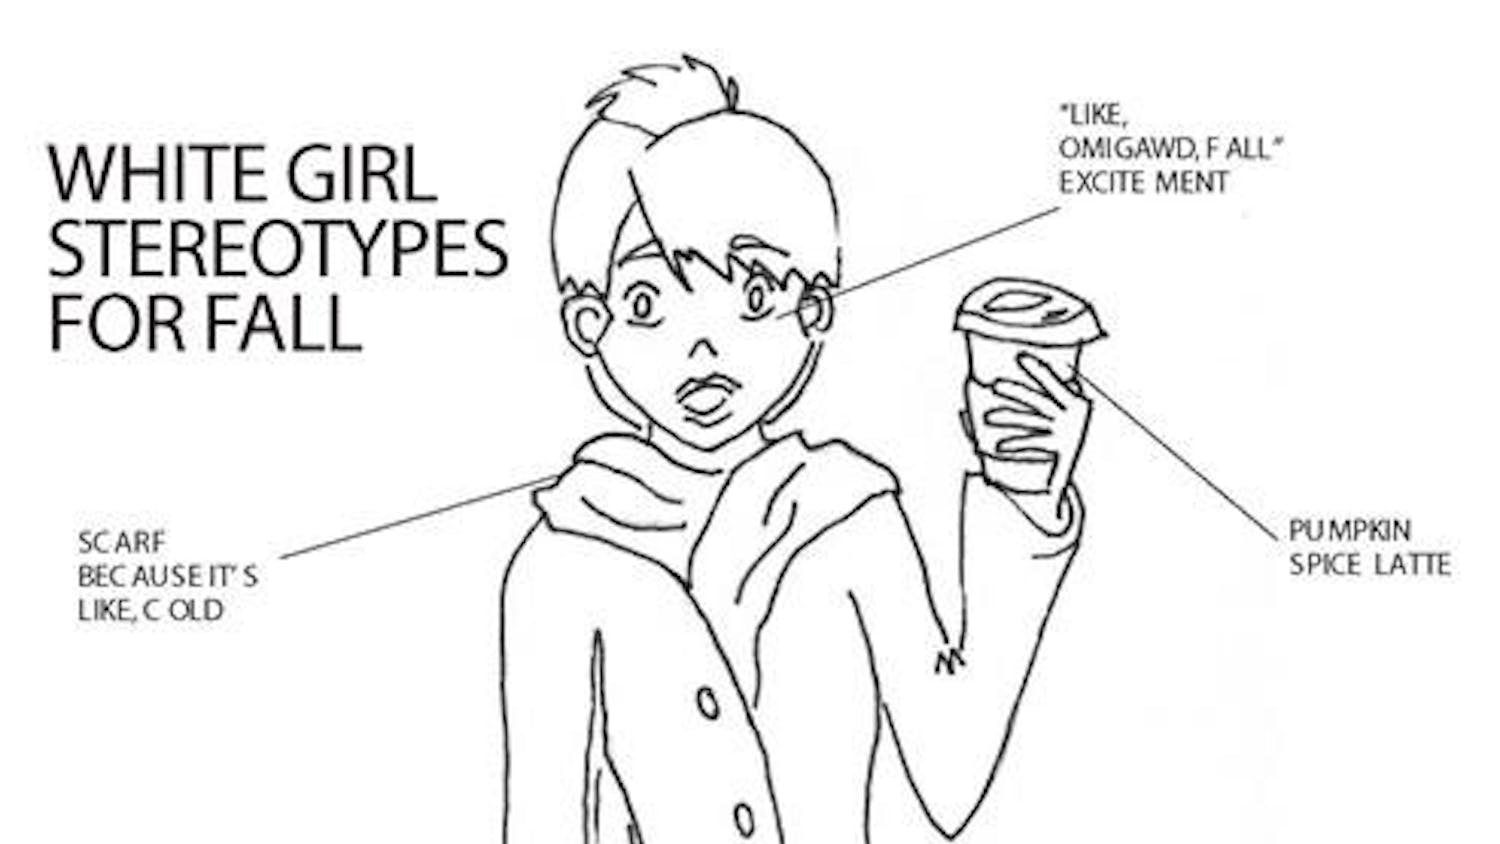 White Girl Stereotypes for Fall